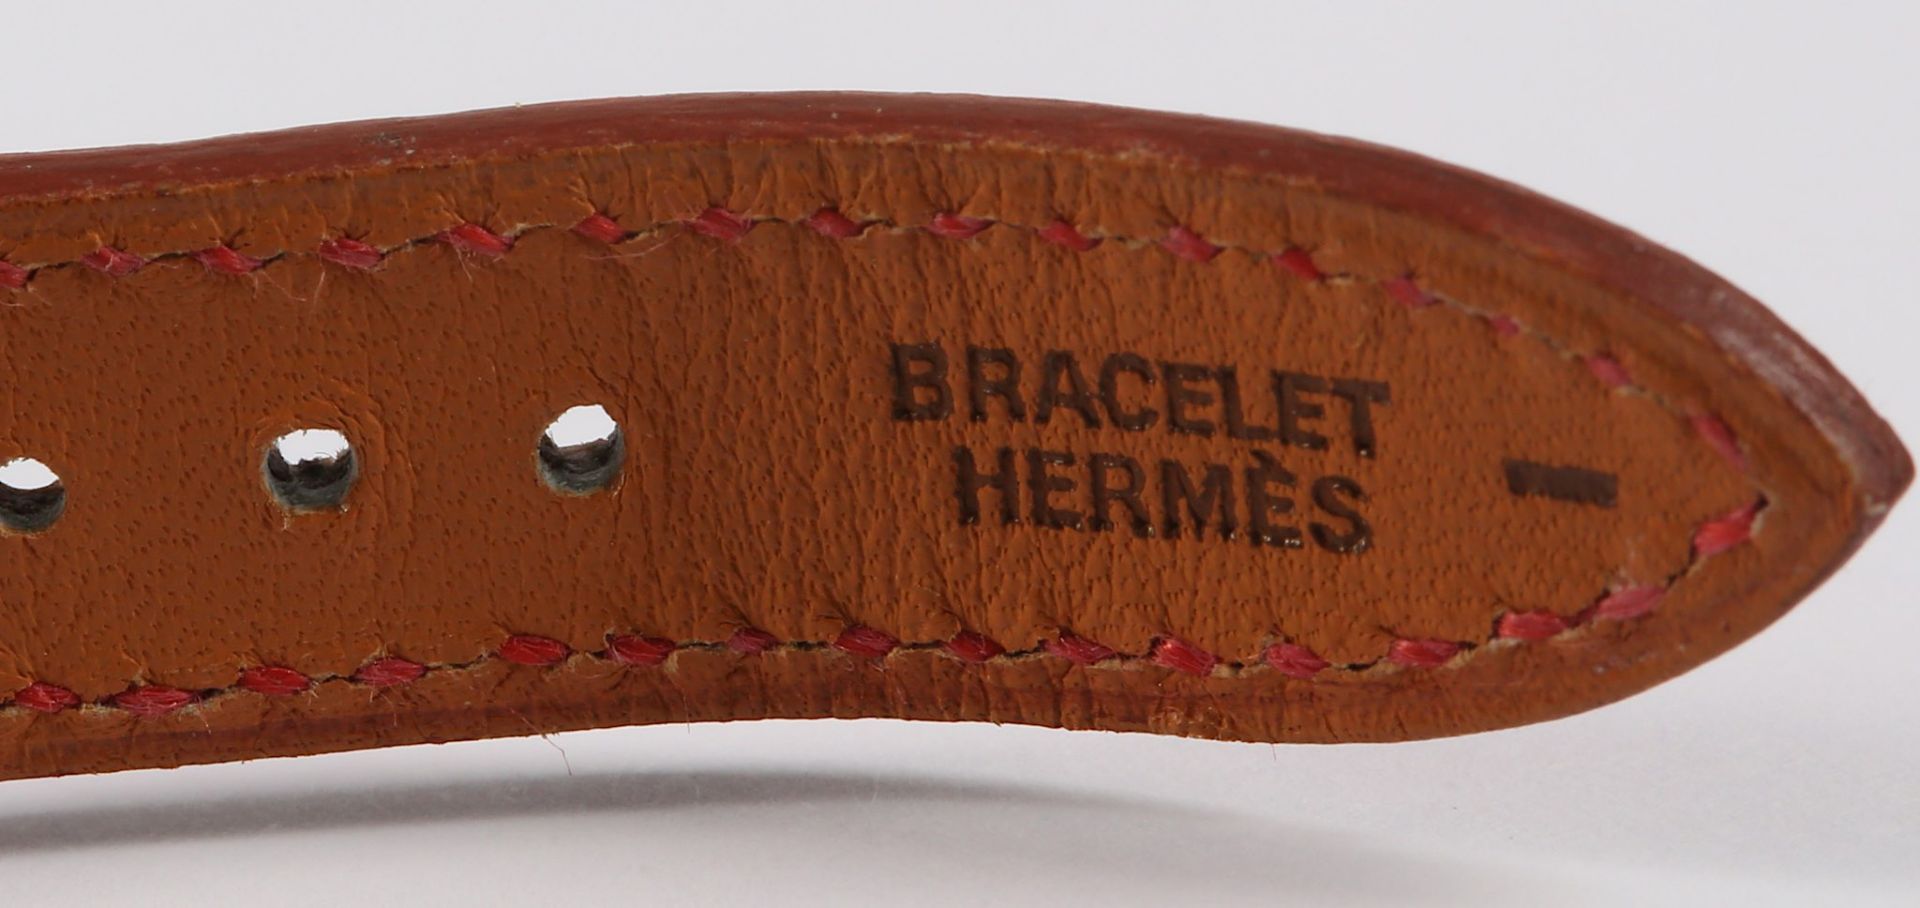 Hermes Red Lizard Kelly Watch, 1990s (date code faint), red lizard skin strap with gold plated - Bild 5 aus 6